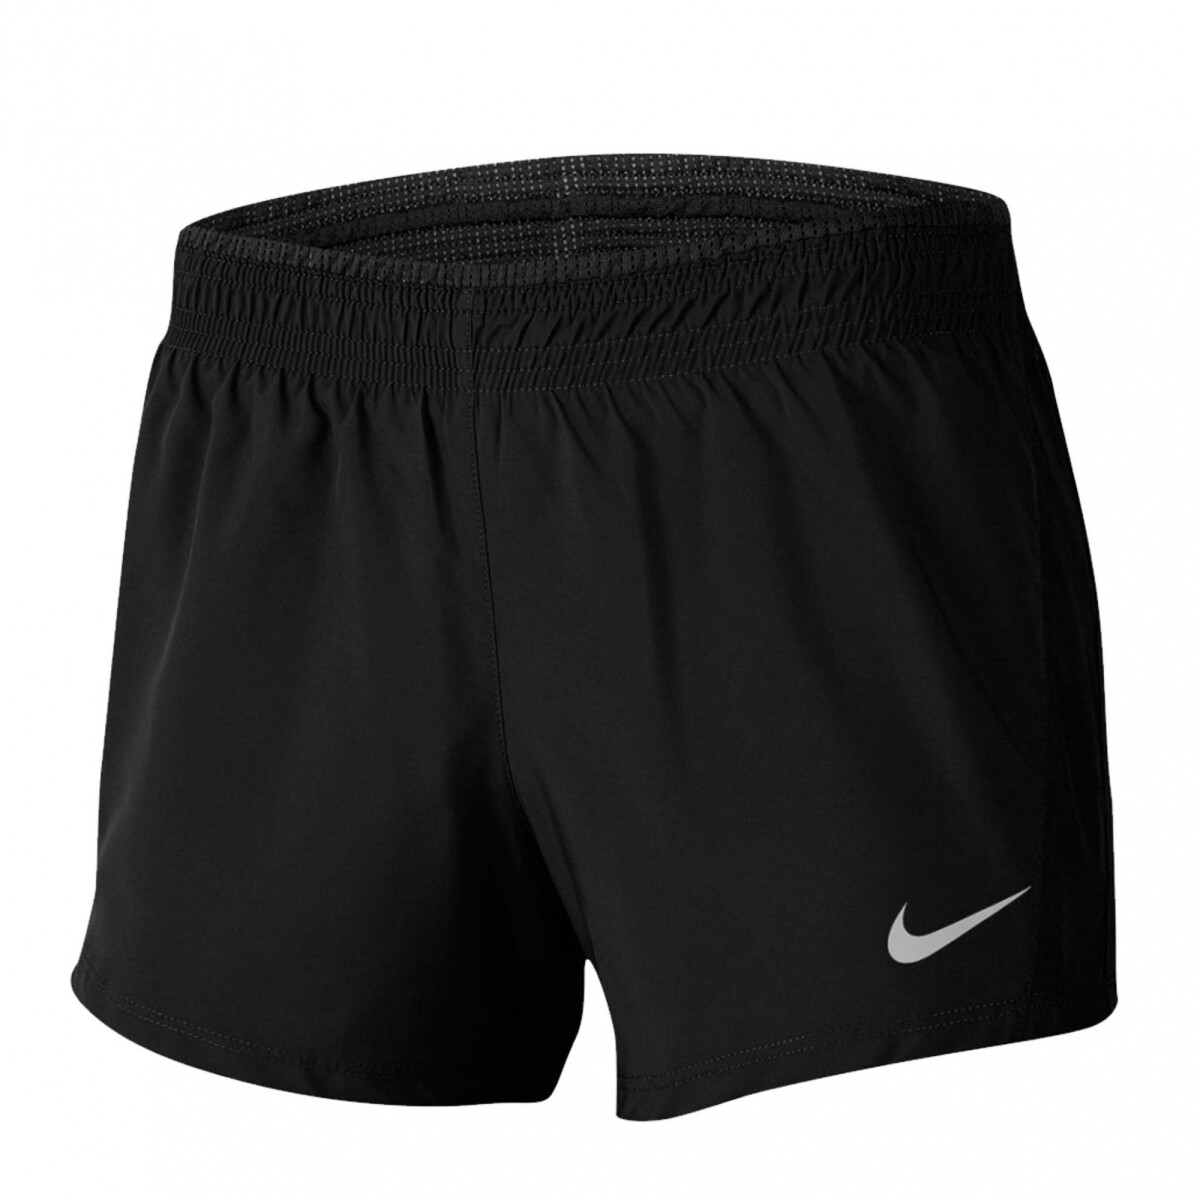 Short Nike Running Dama 10K 2IN1 Black - Color Único 